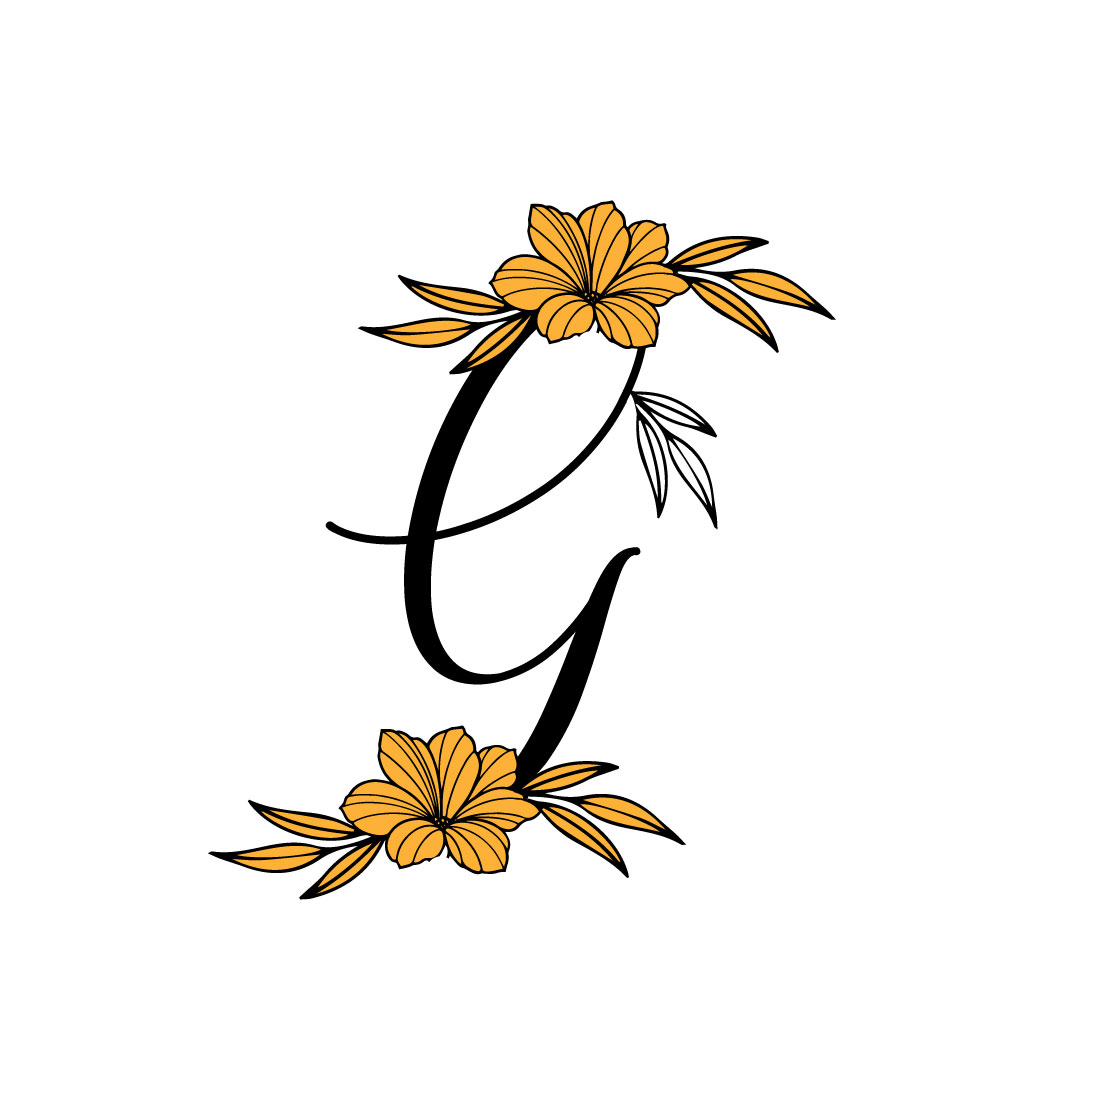 Free G letter logo cover image.